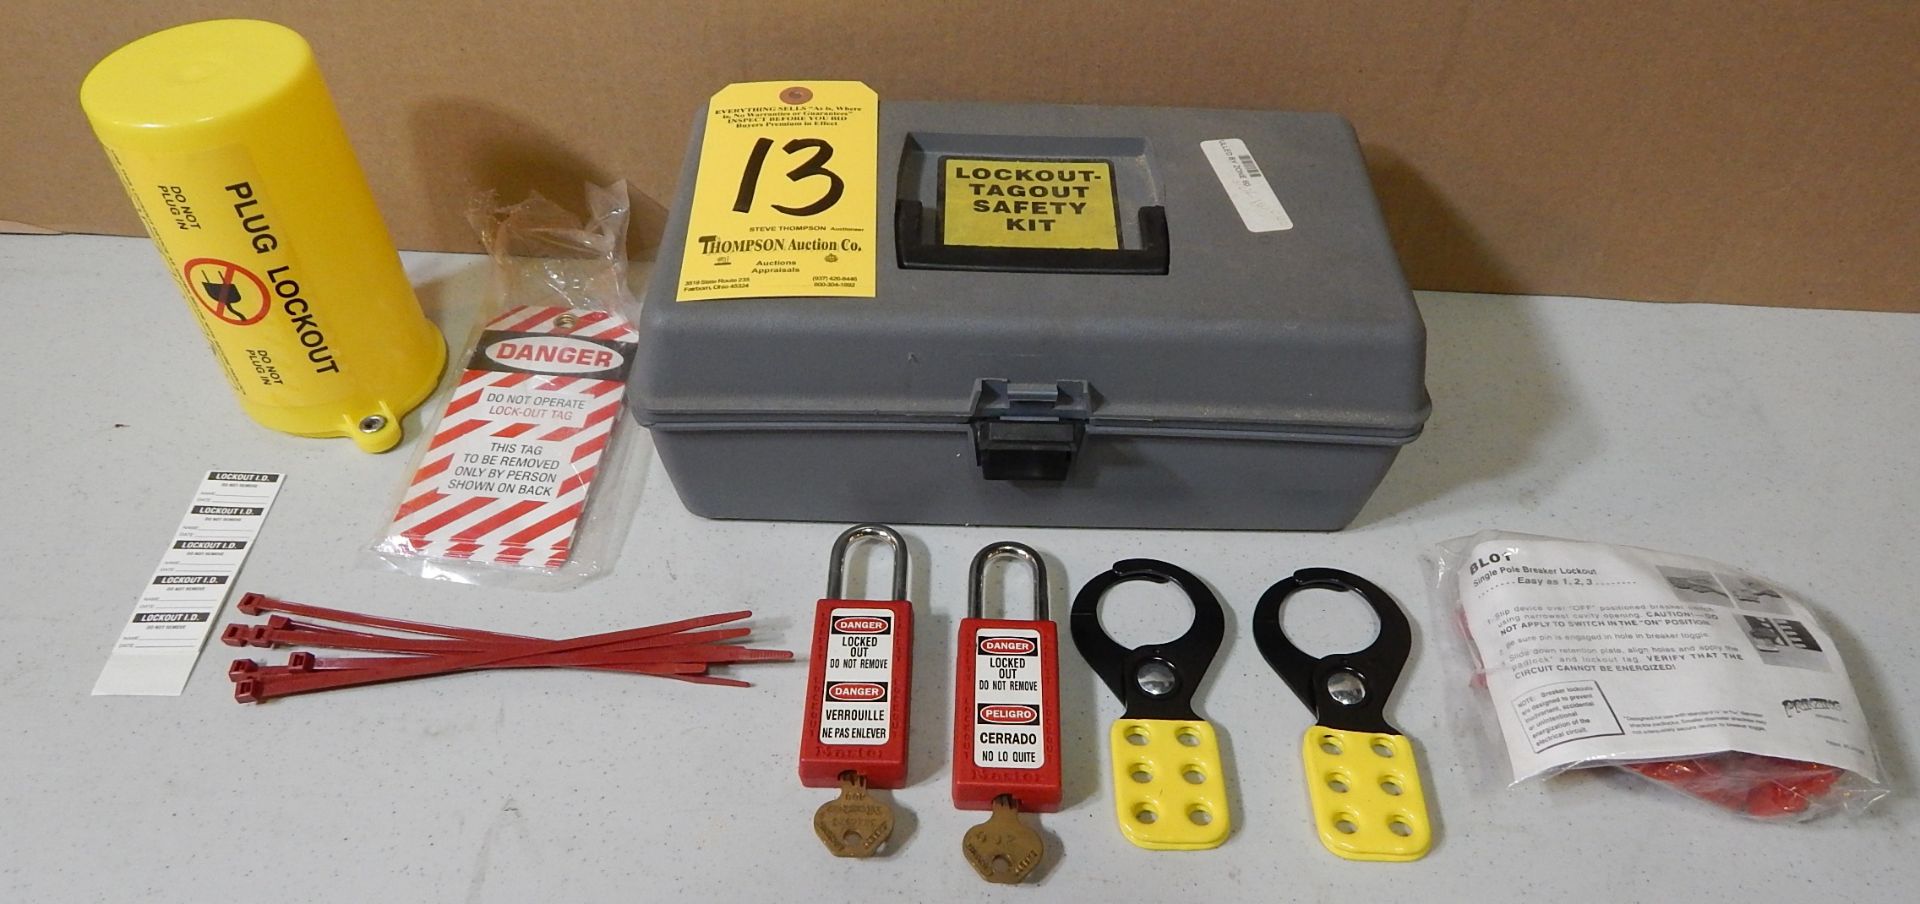 Lockout/Tagout Safety Kit